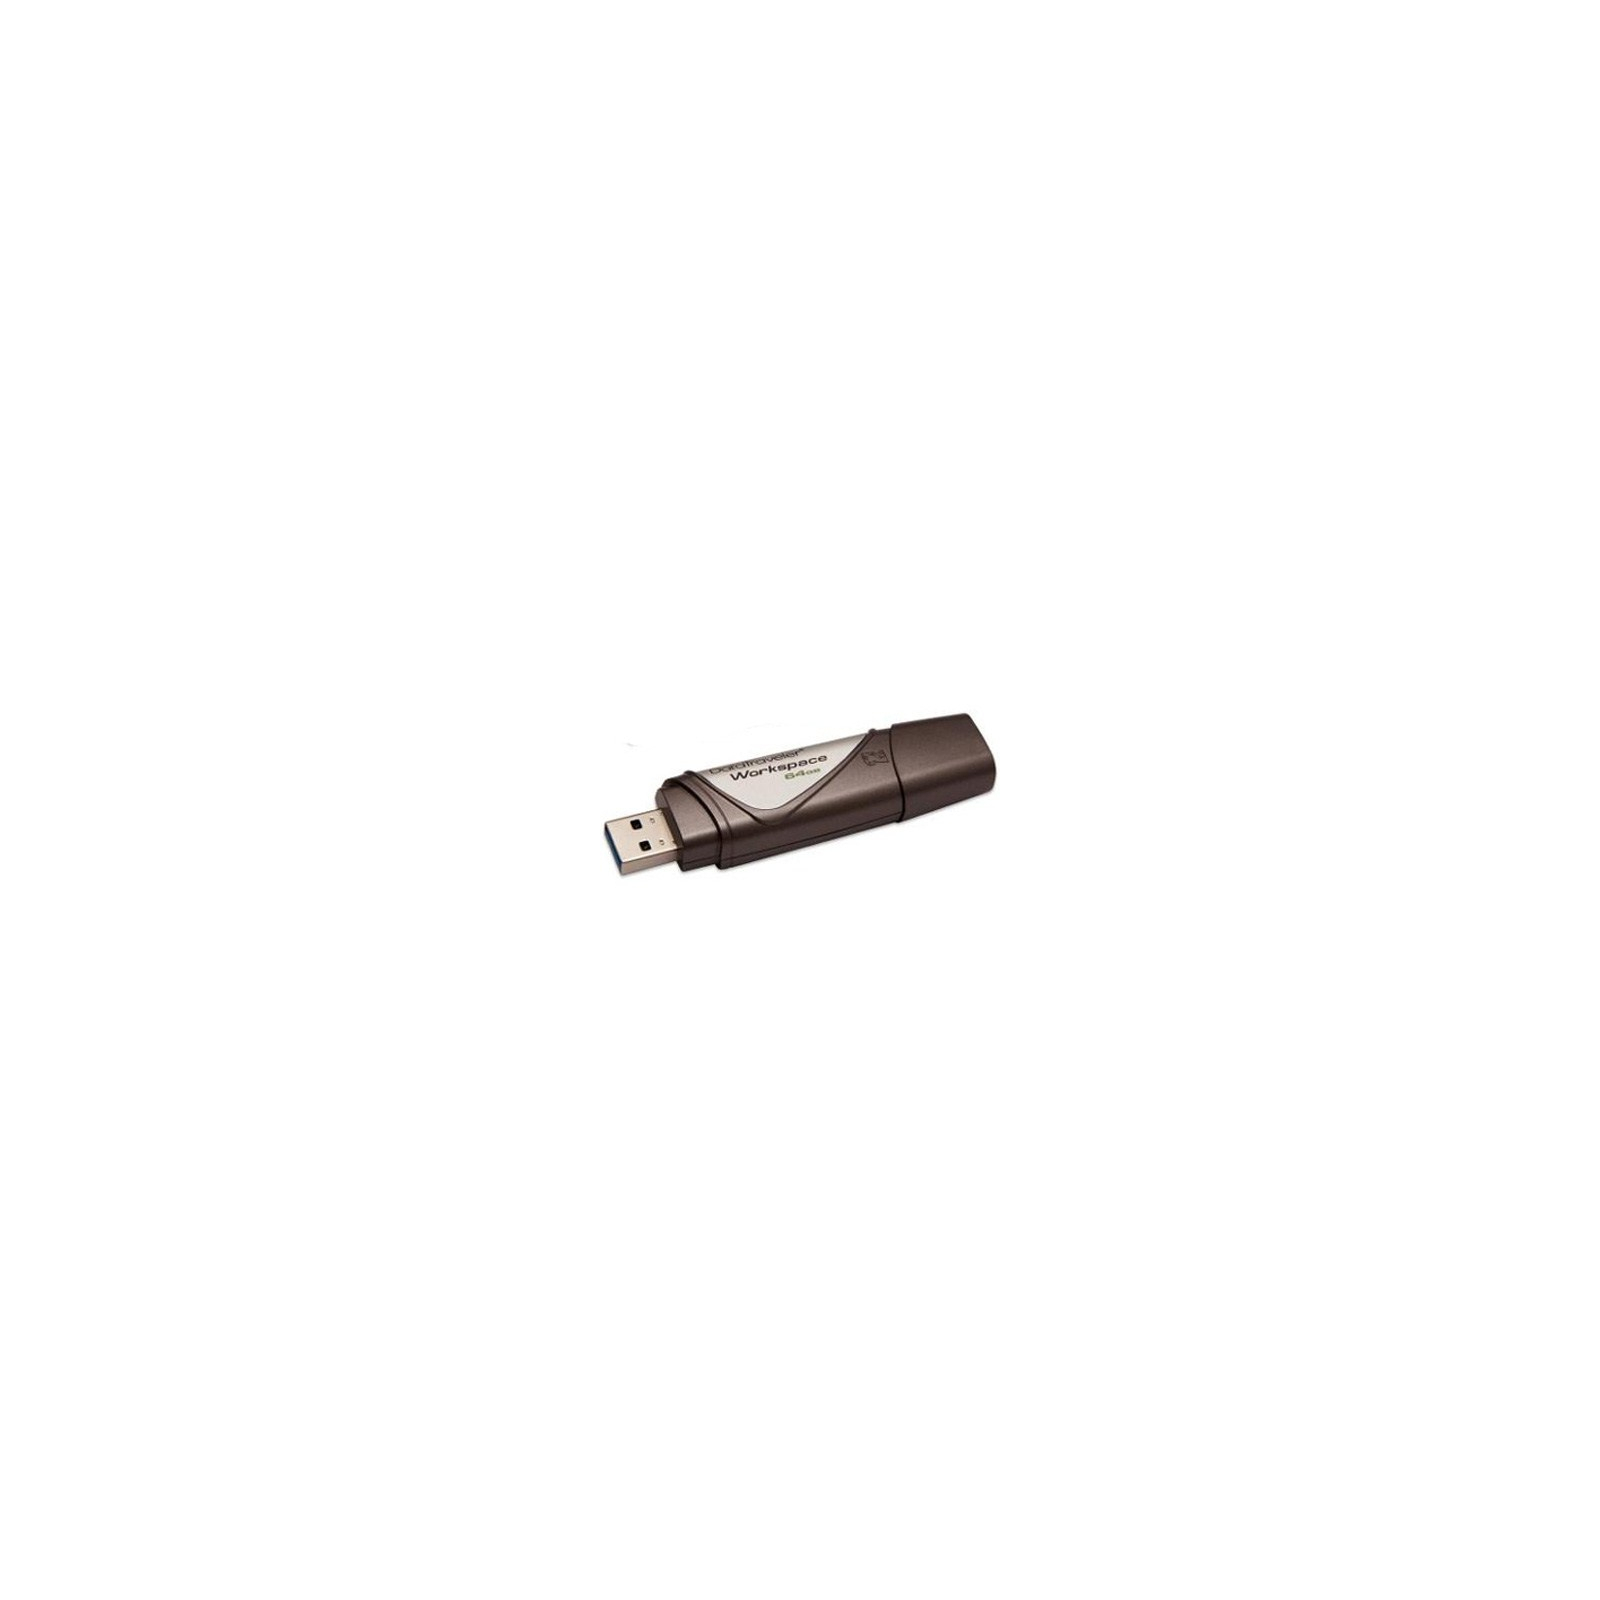 USB флеш накопитель Kingston 32Gb DataTraveler Workspace (DTWS/32GB) изображение 2